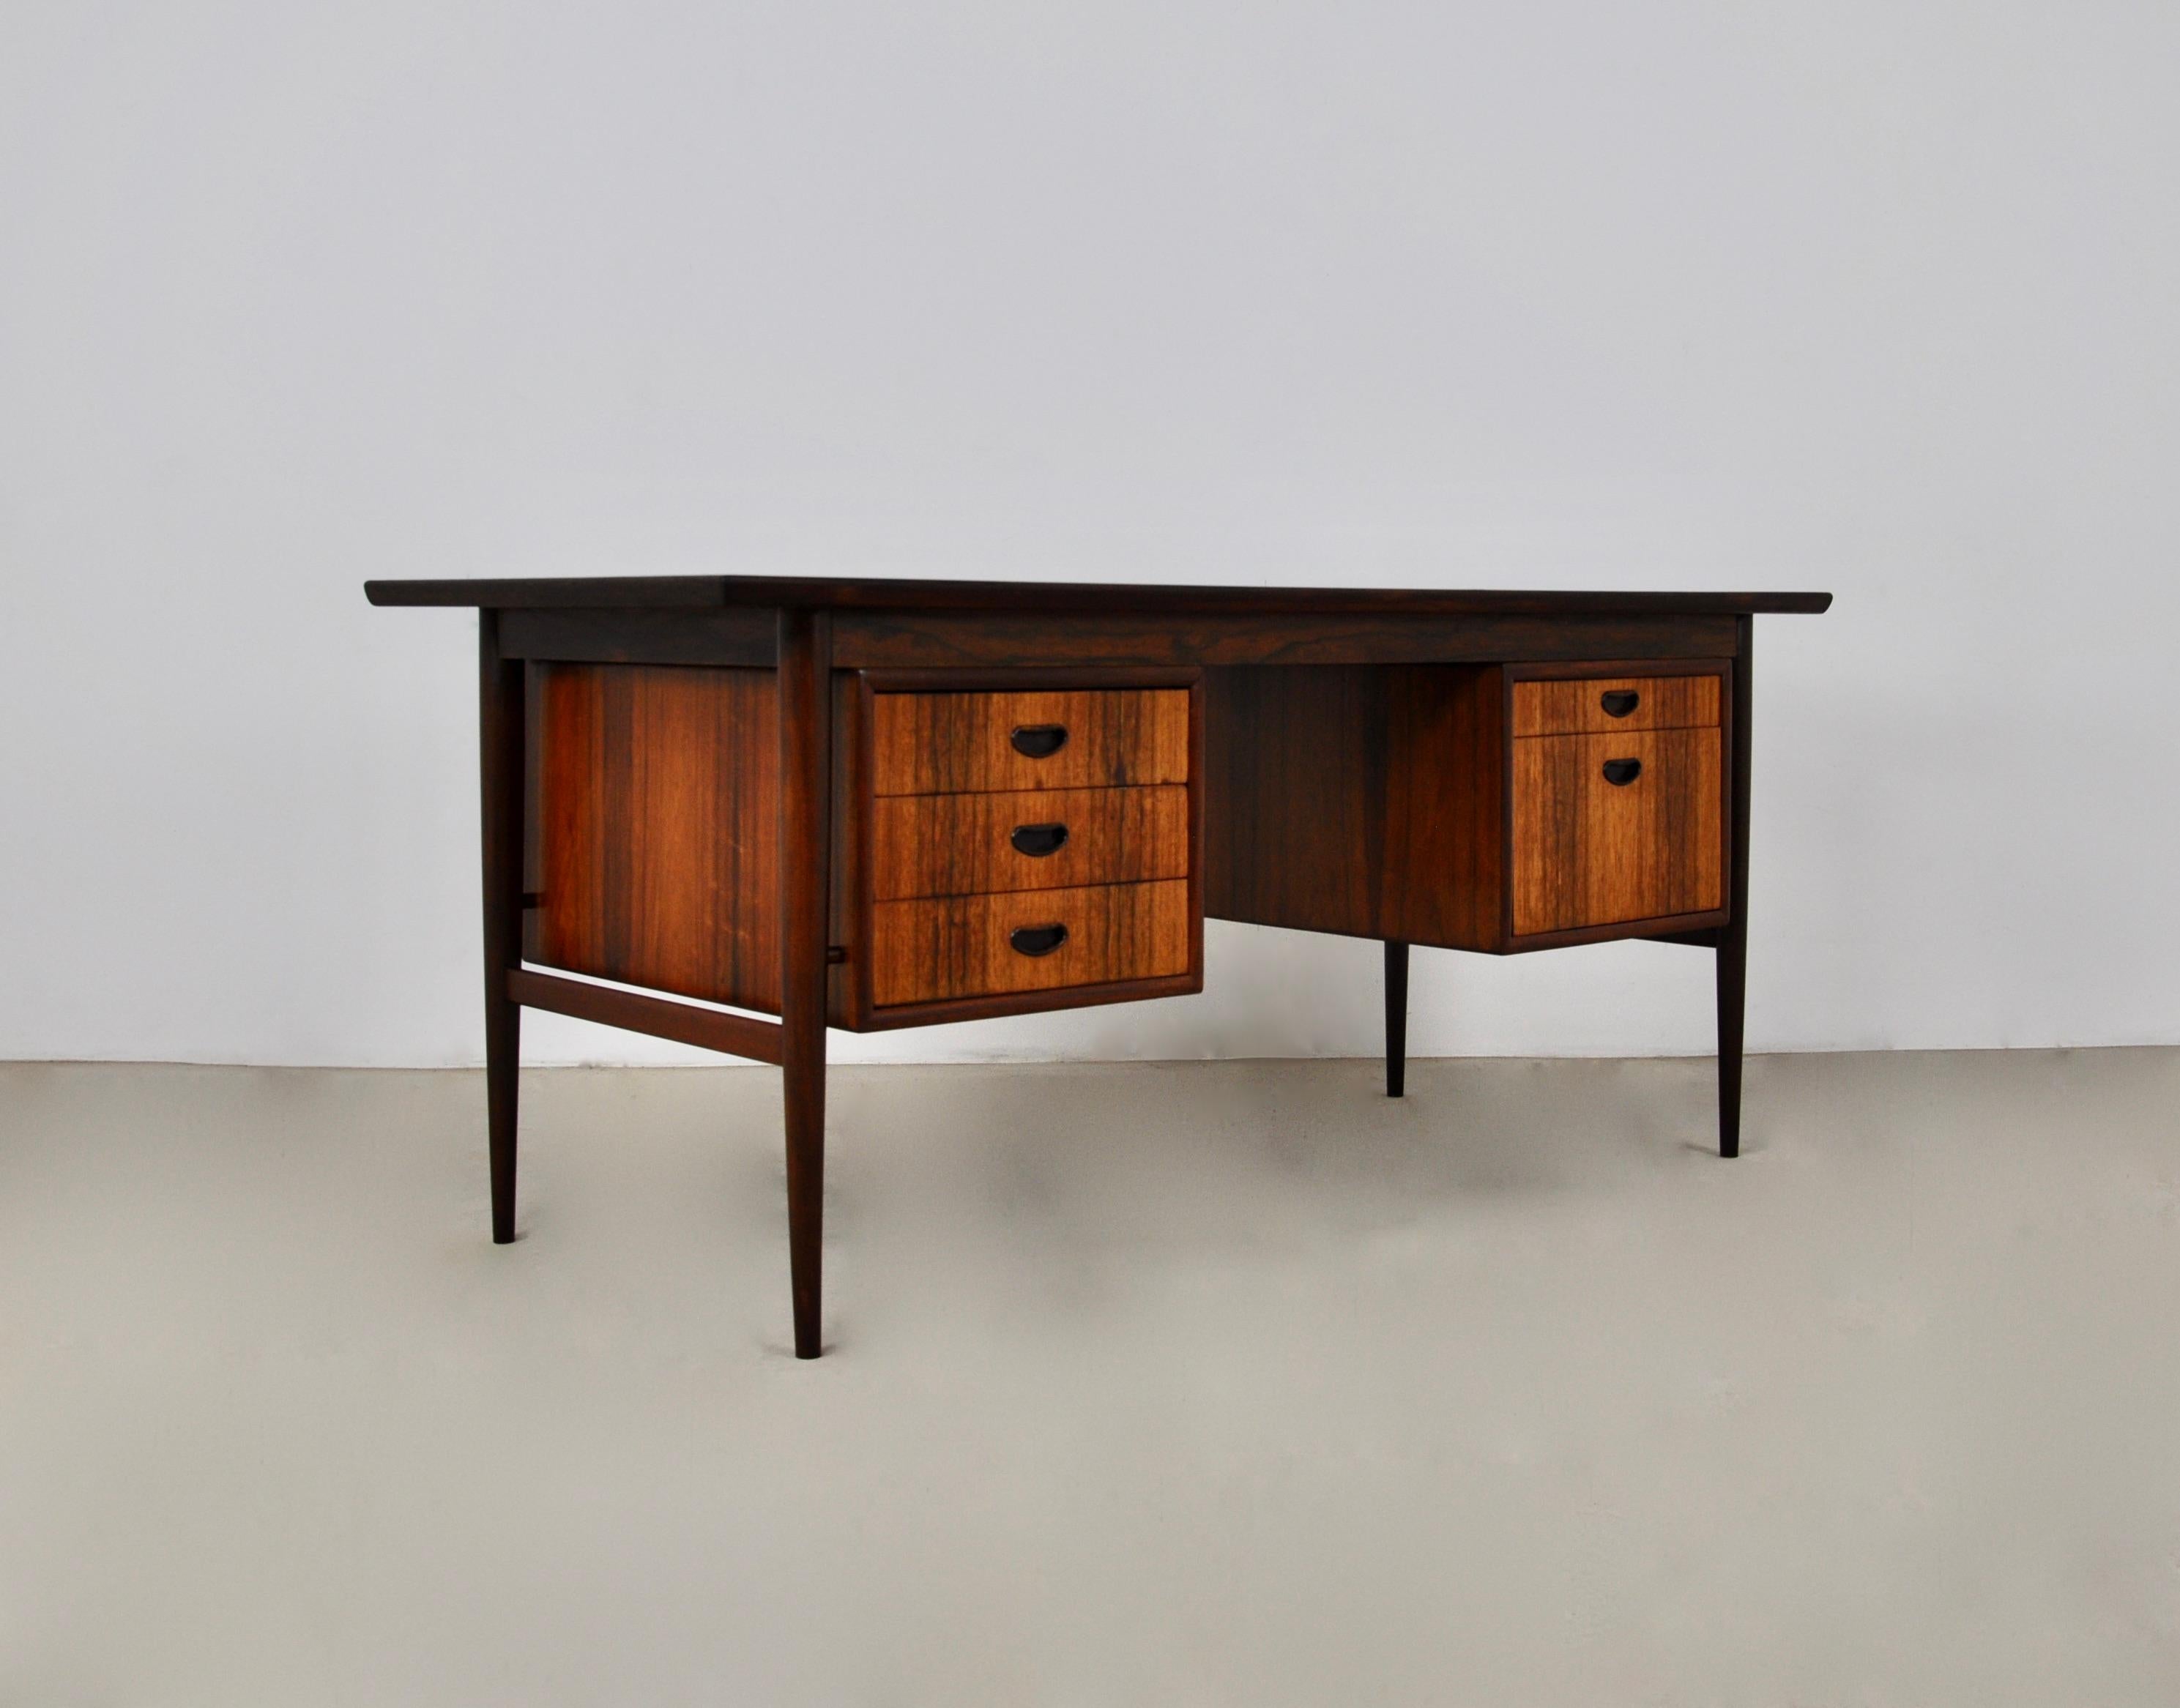 Wooden desk with metal handles designed by Oswal Vermaecke for v form.